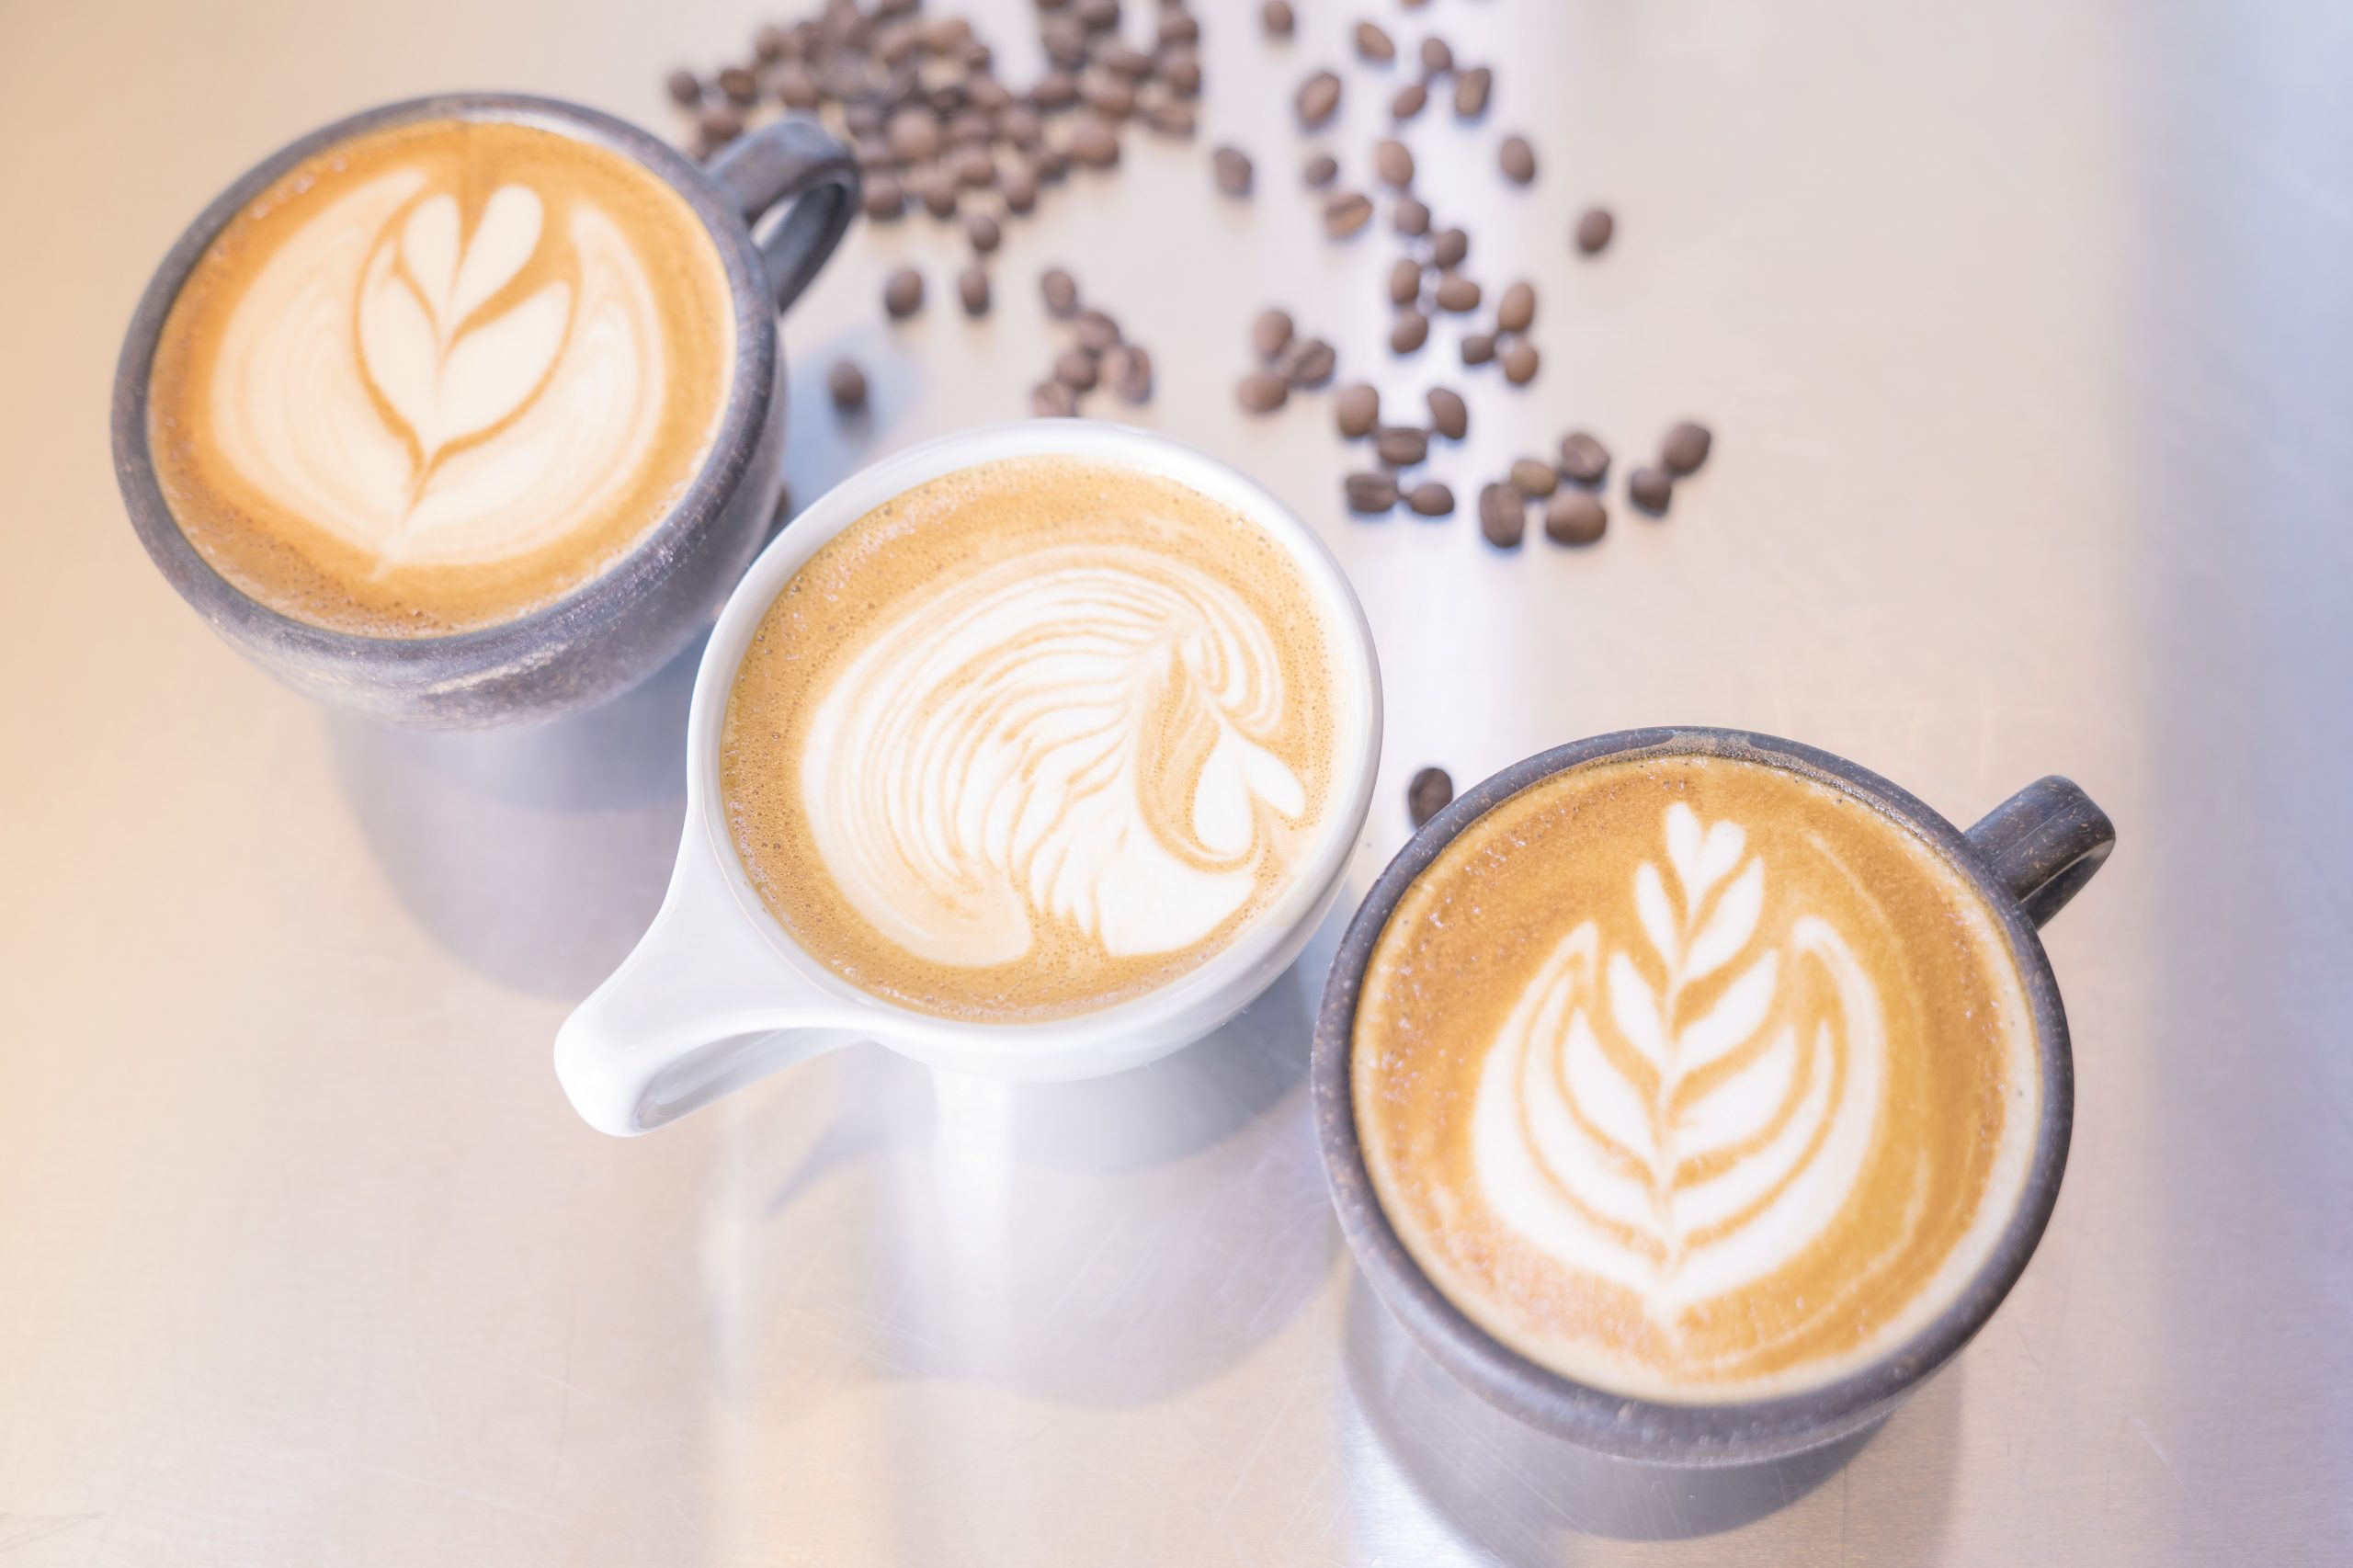 Barista Specialty Coffee - A Promo Photoshoot for Social Media